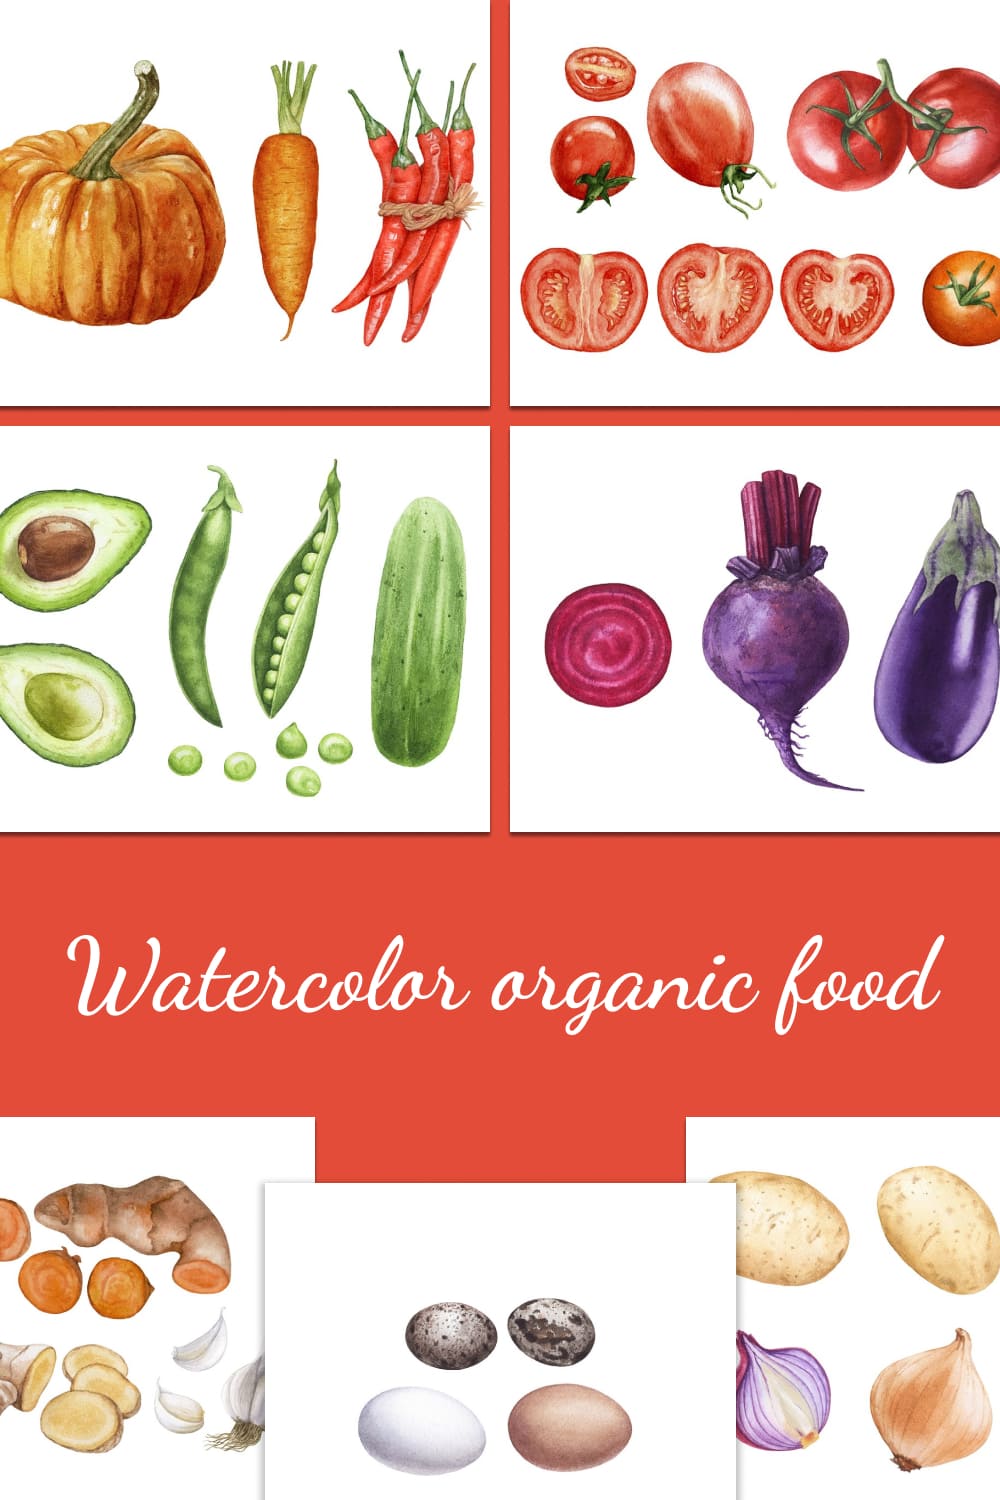 Watercolor organic food - pinterest image preview.